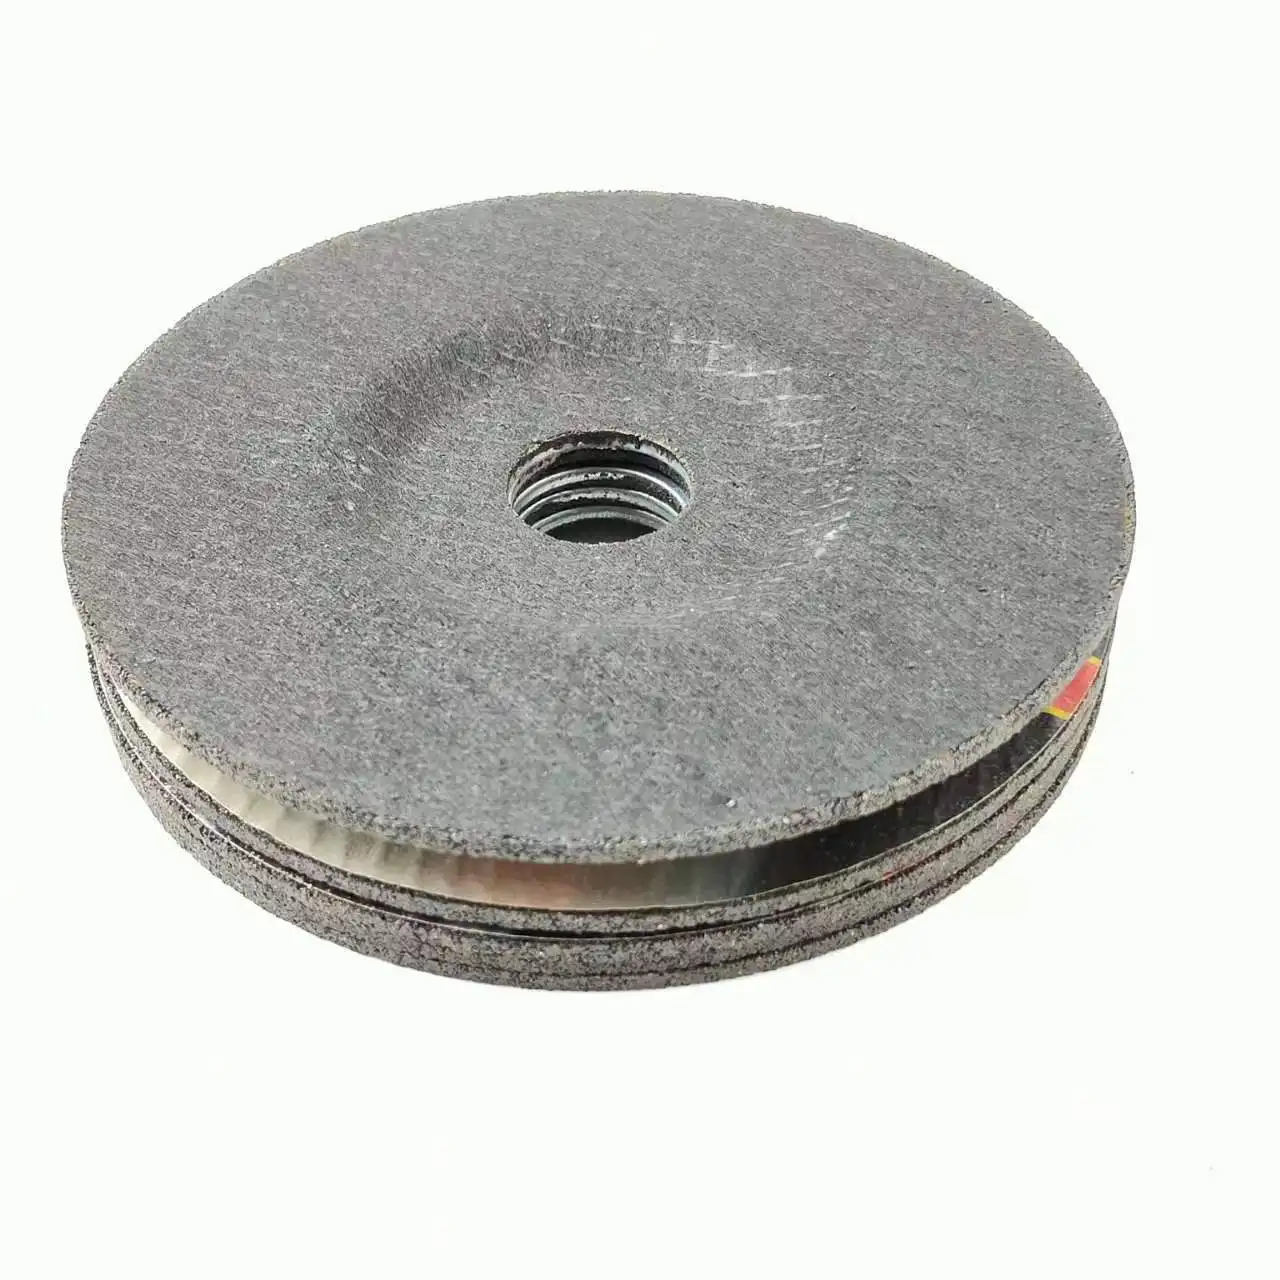 125mm Professional Tile Cutting Disk Wet Cutting Diamond Circular Saw Blade for Ceramic Porcelain Tile (1600629235800)